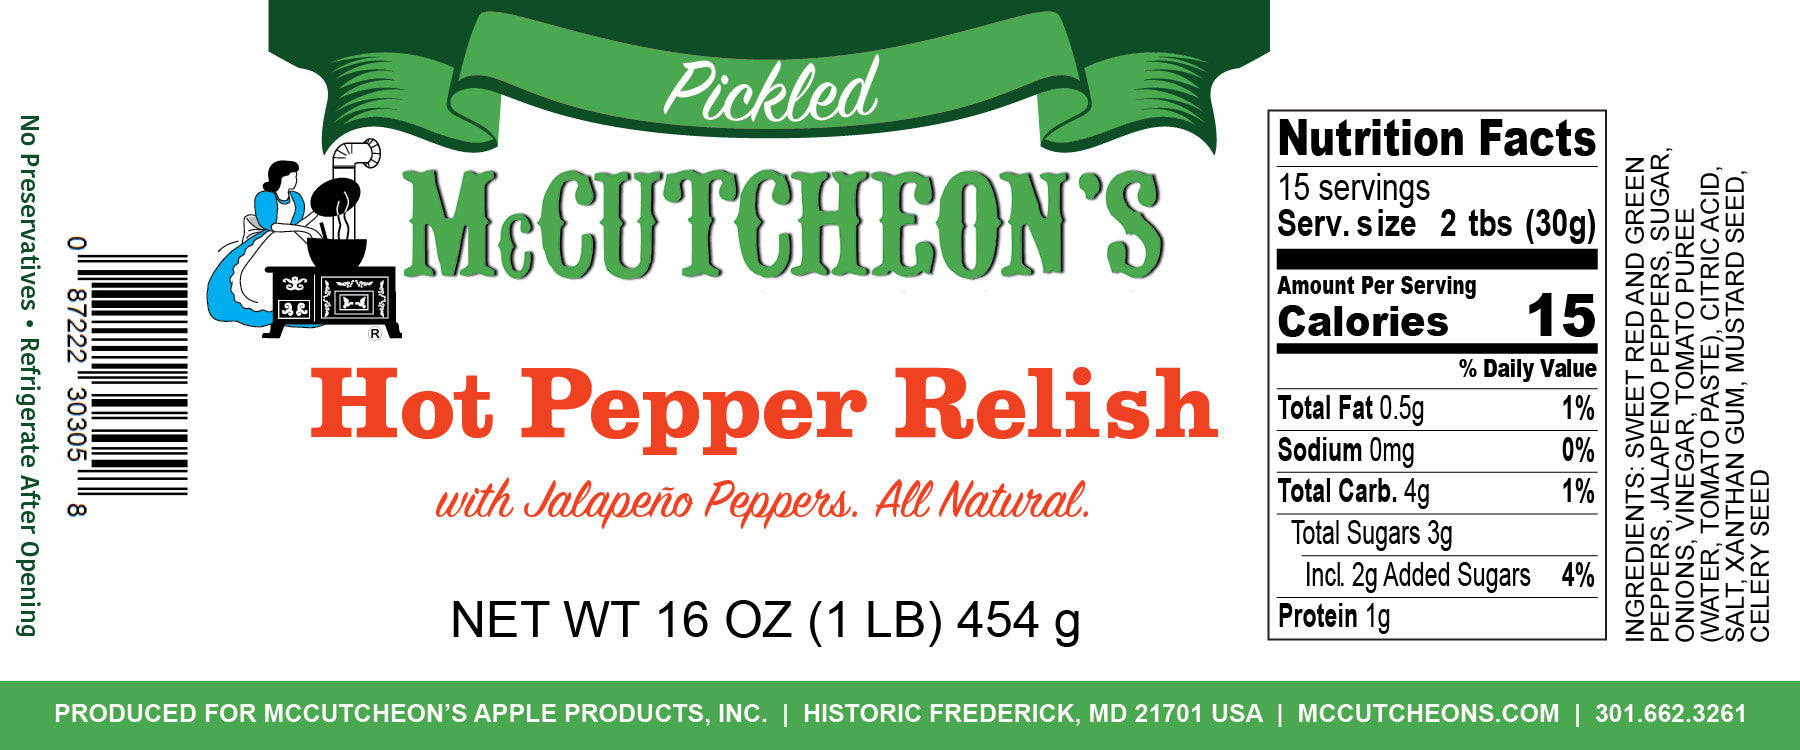 nutrition label for McCutcheon's hot pepper relish